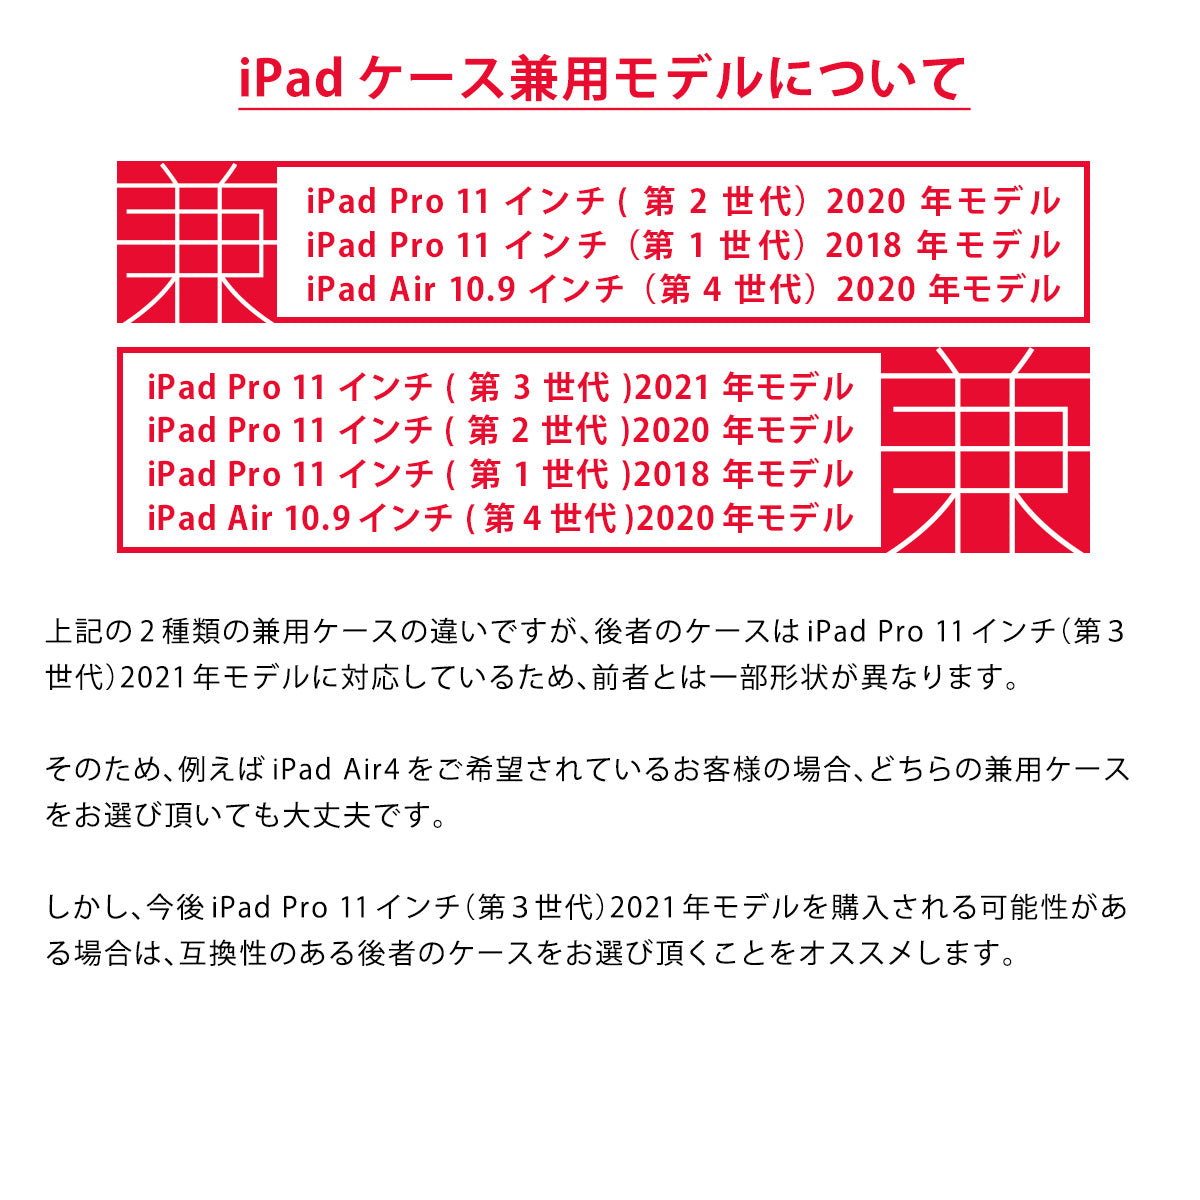 iPadケース兼用モデルについて